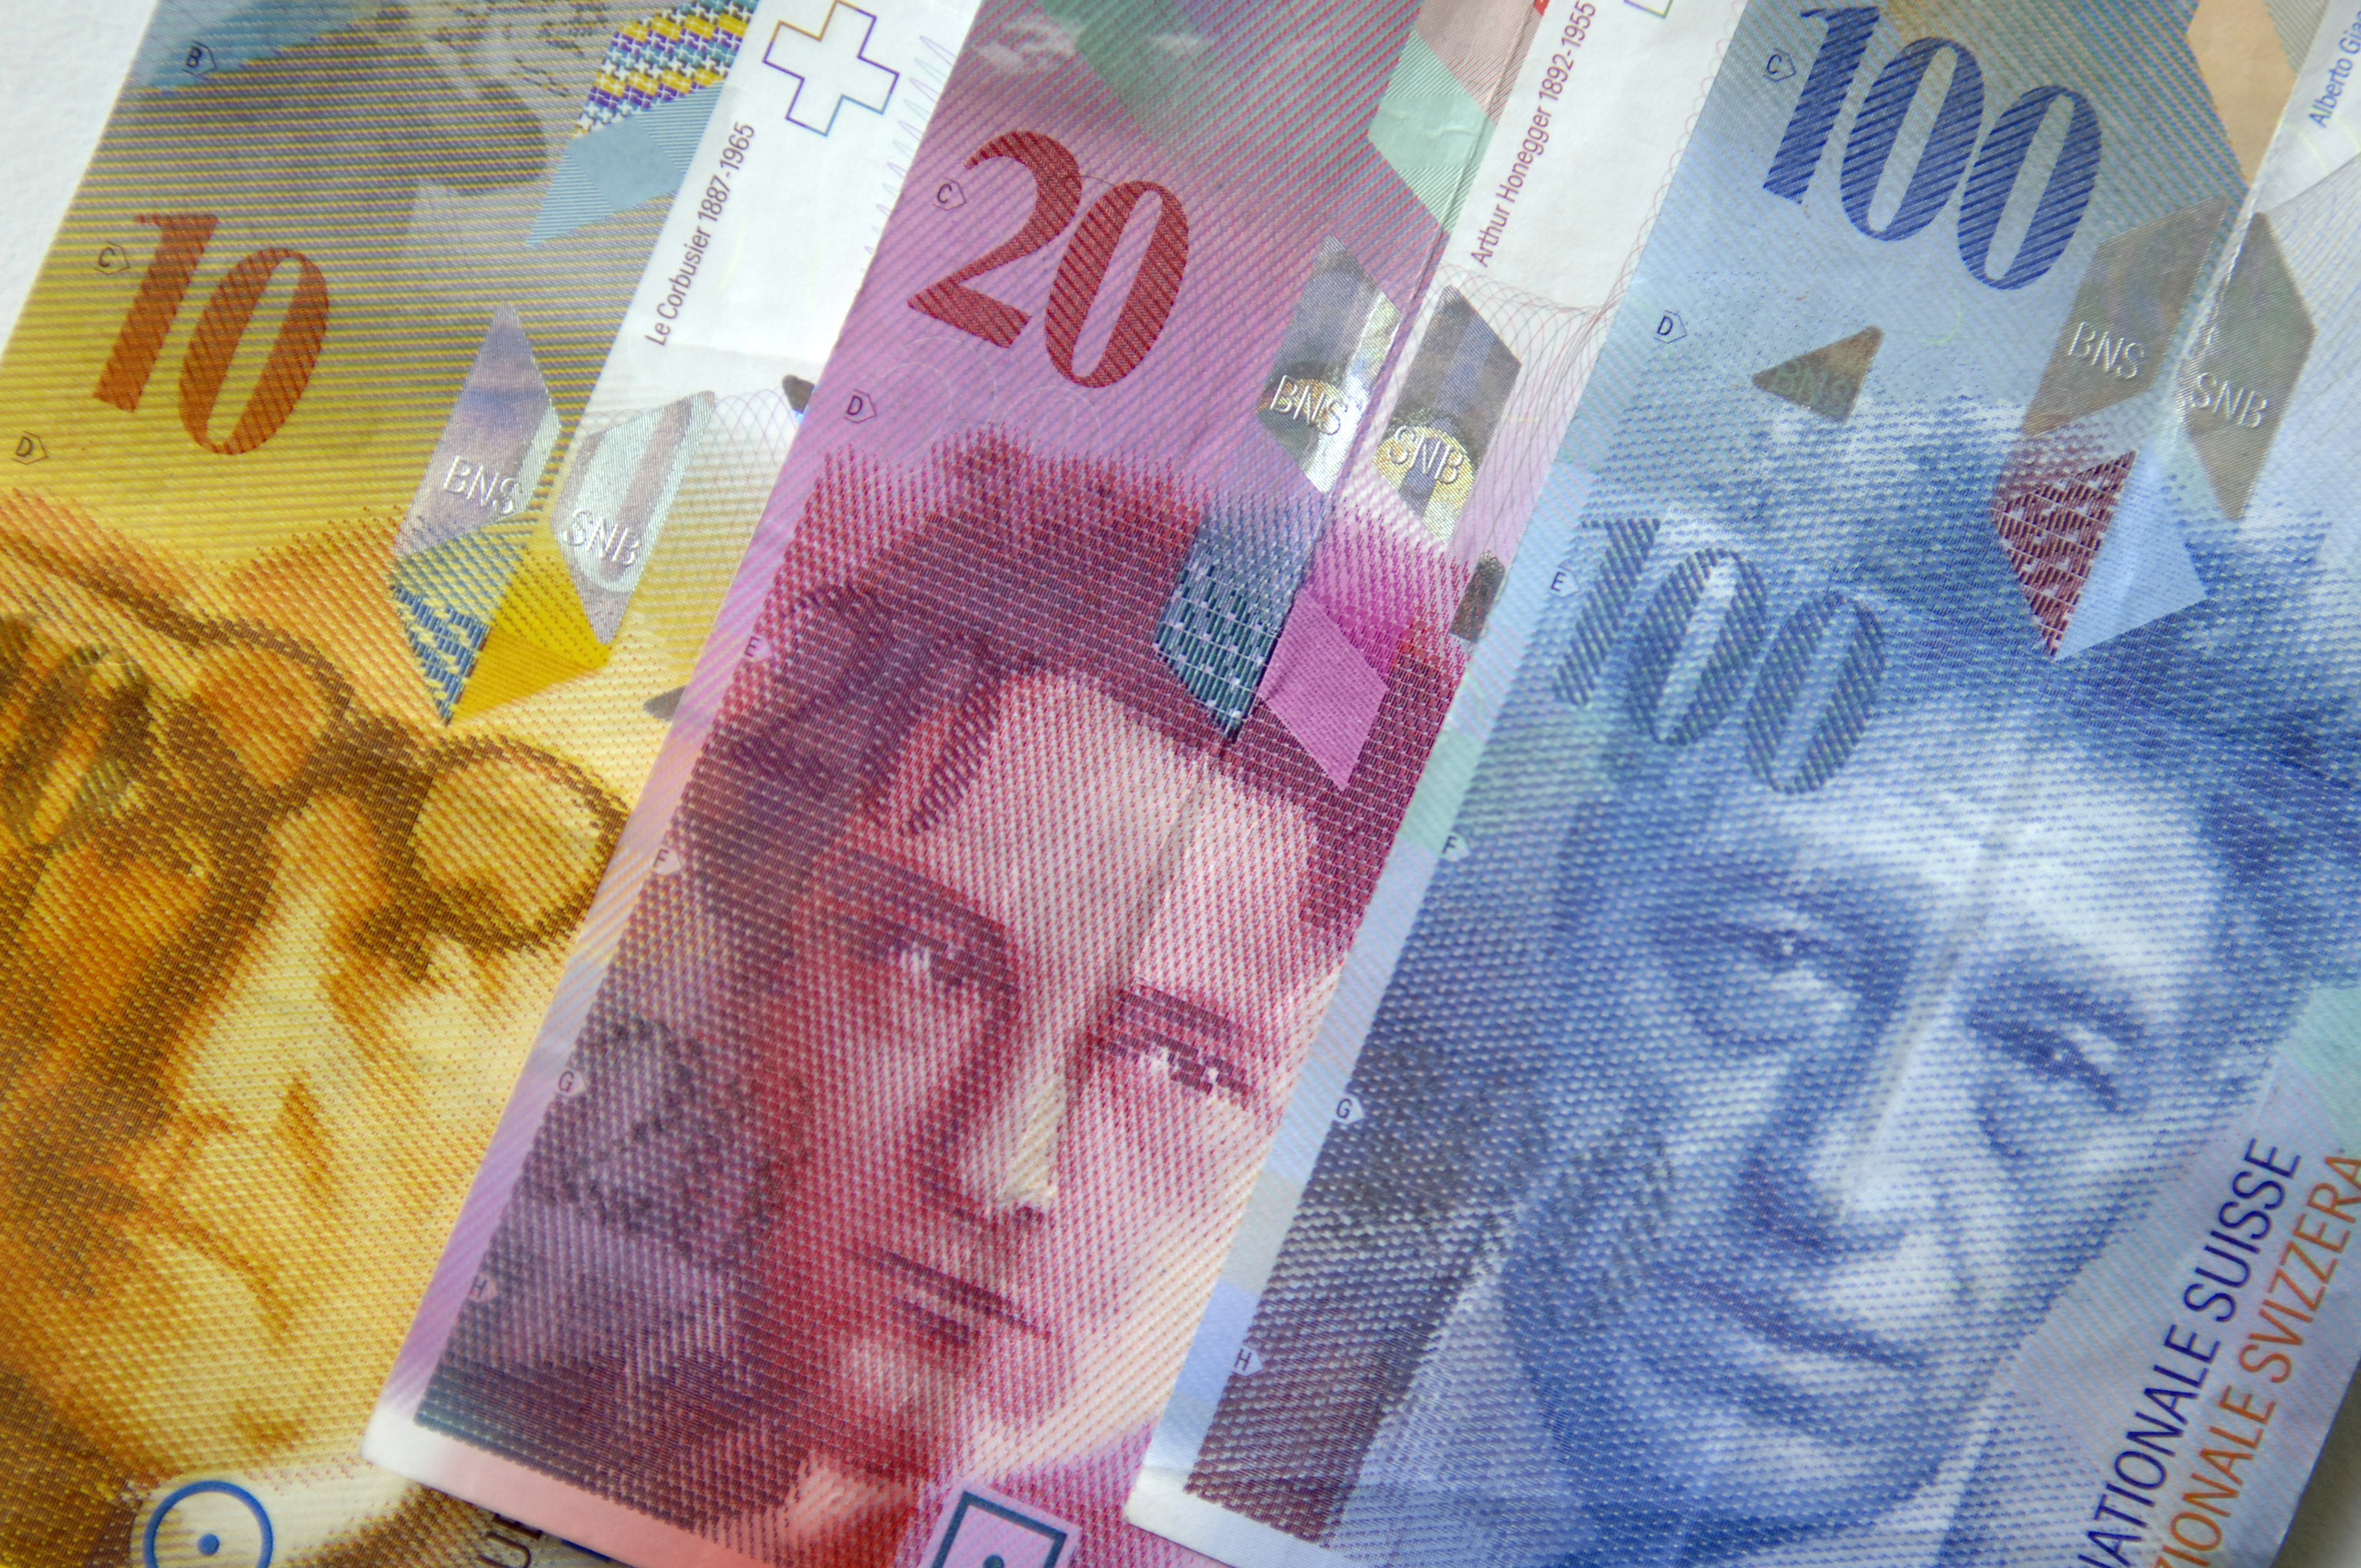 Swiss franc notes.
